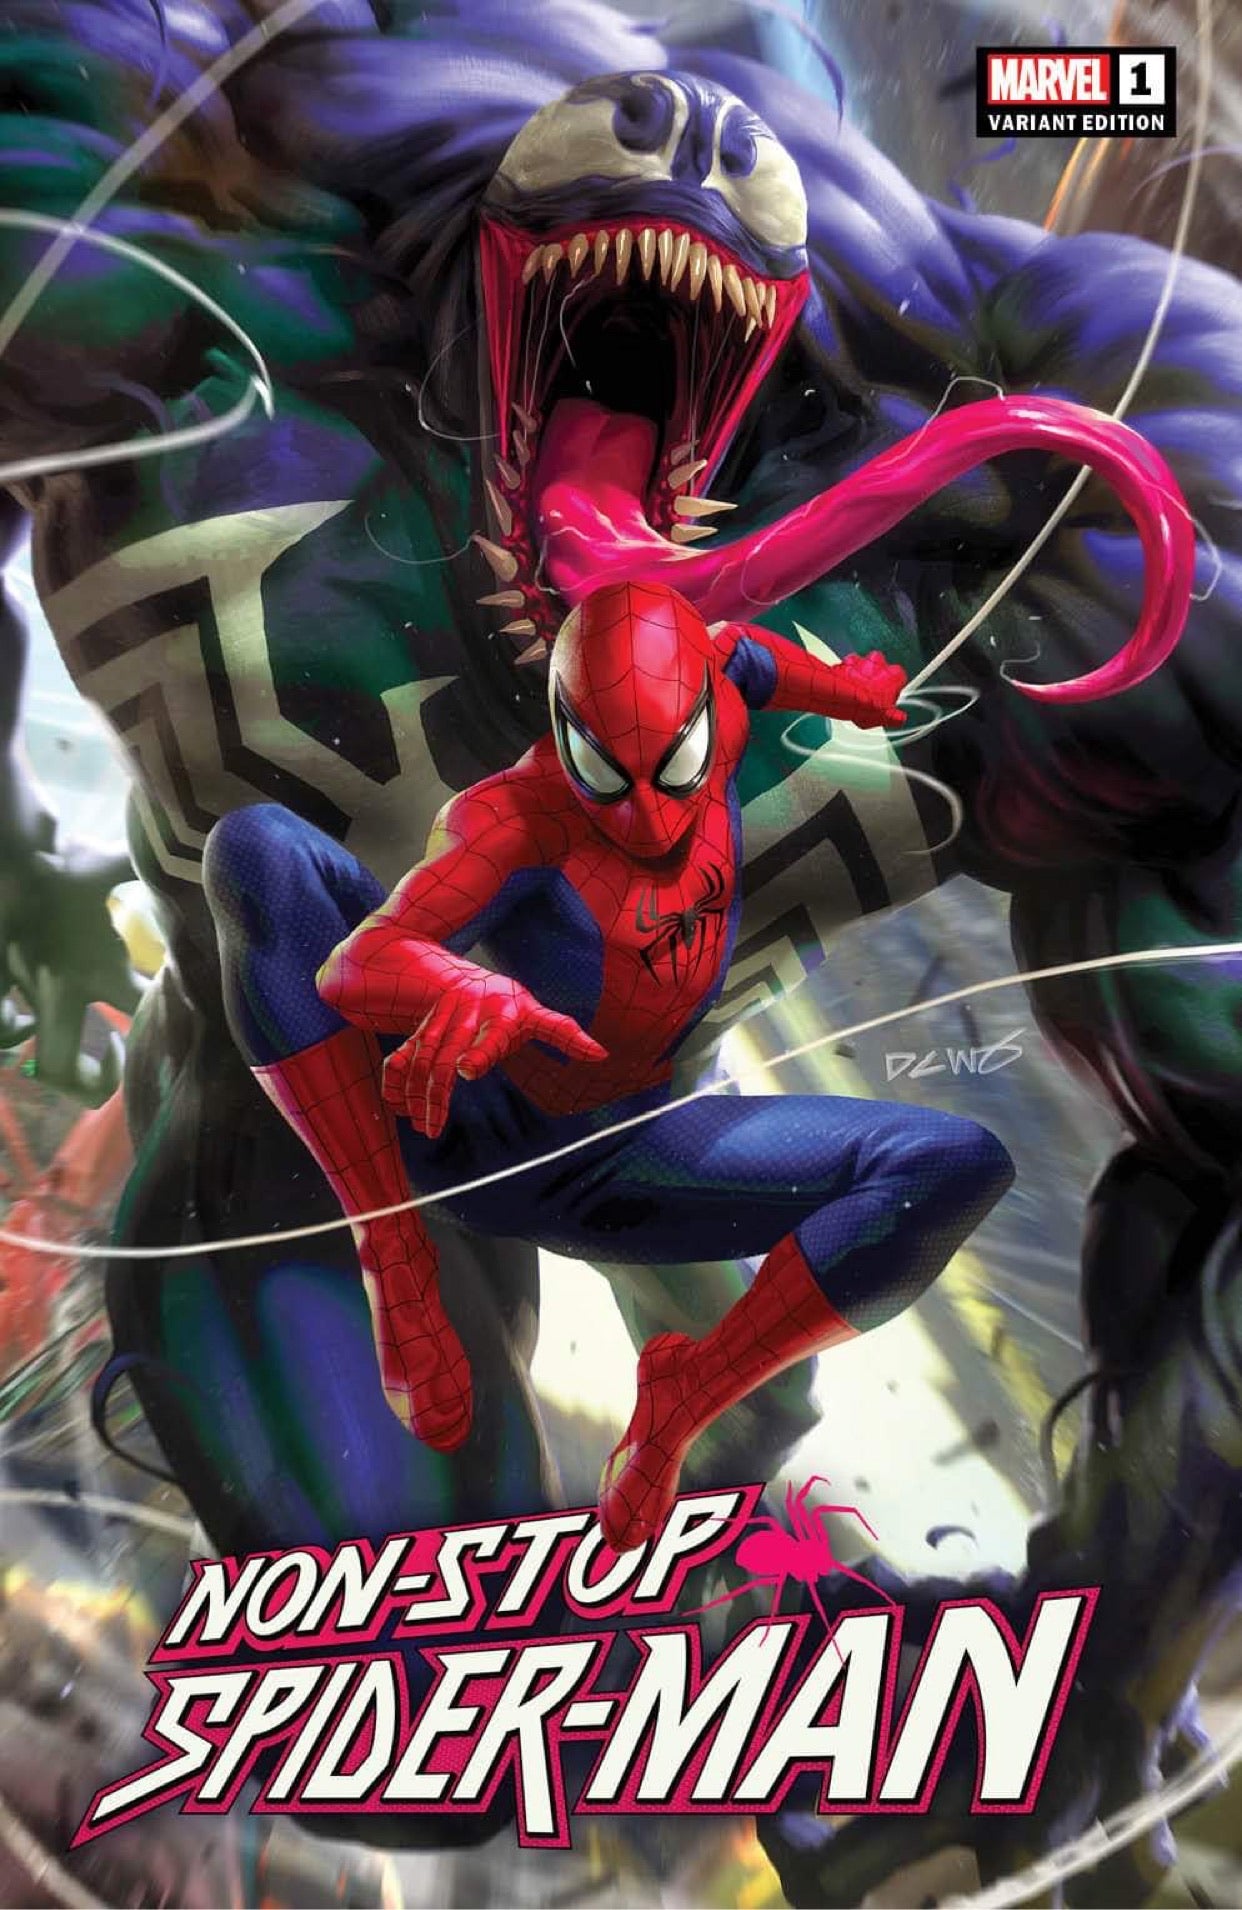 Amazing Spider-Man #3 - CK Shared Exclusive - InHyuk Lee – Comic